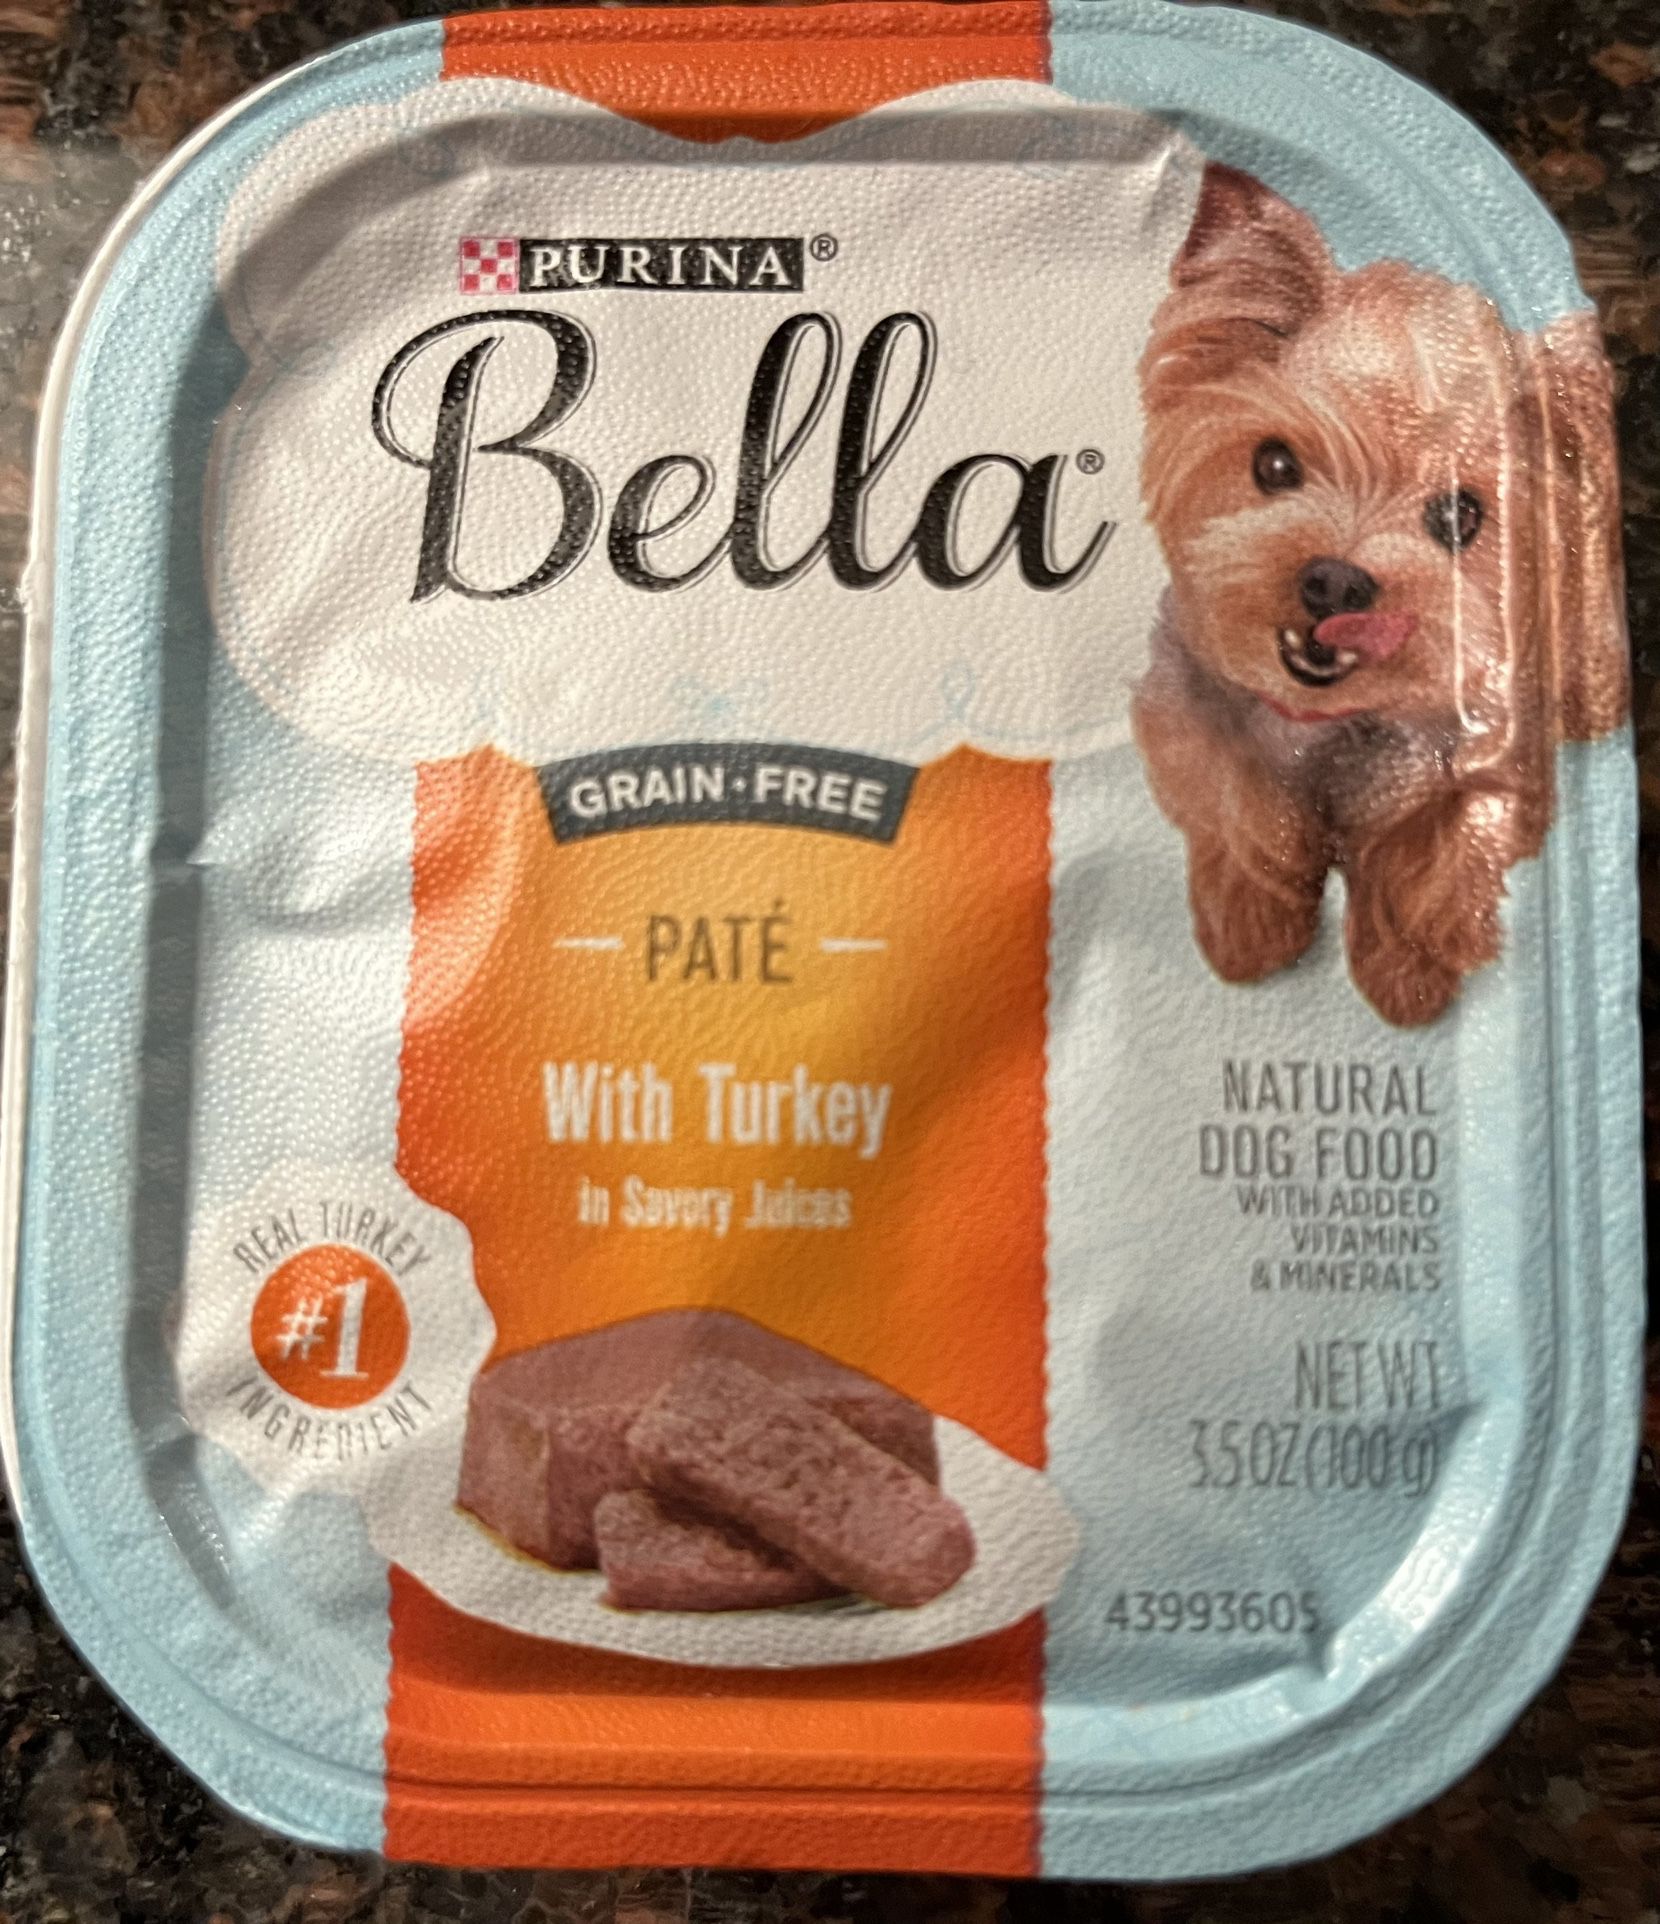 Bella Dog Food by Purina